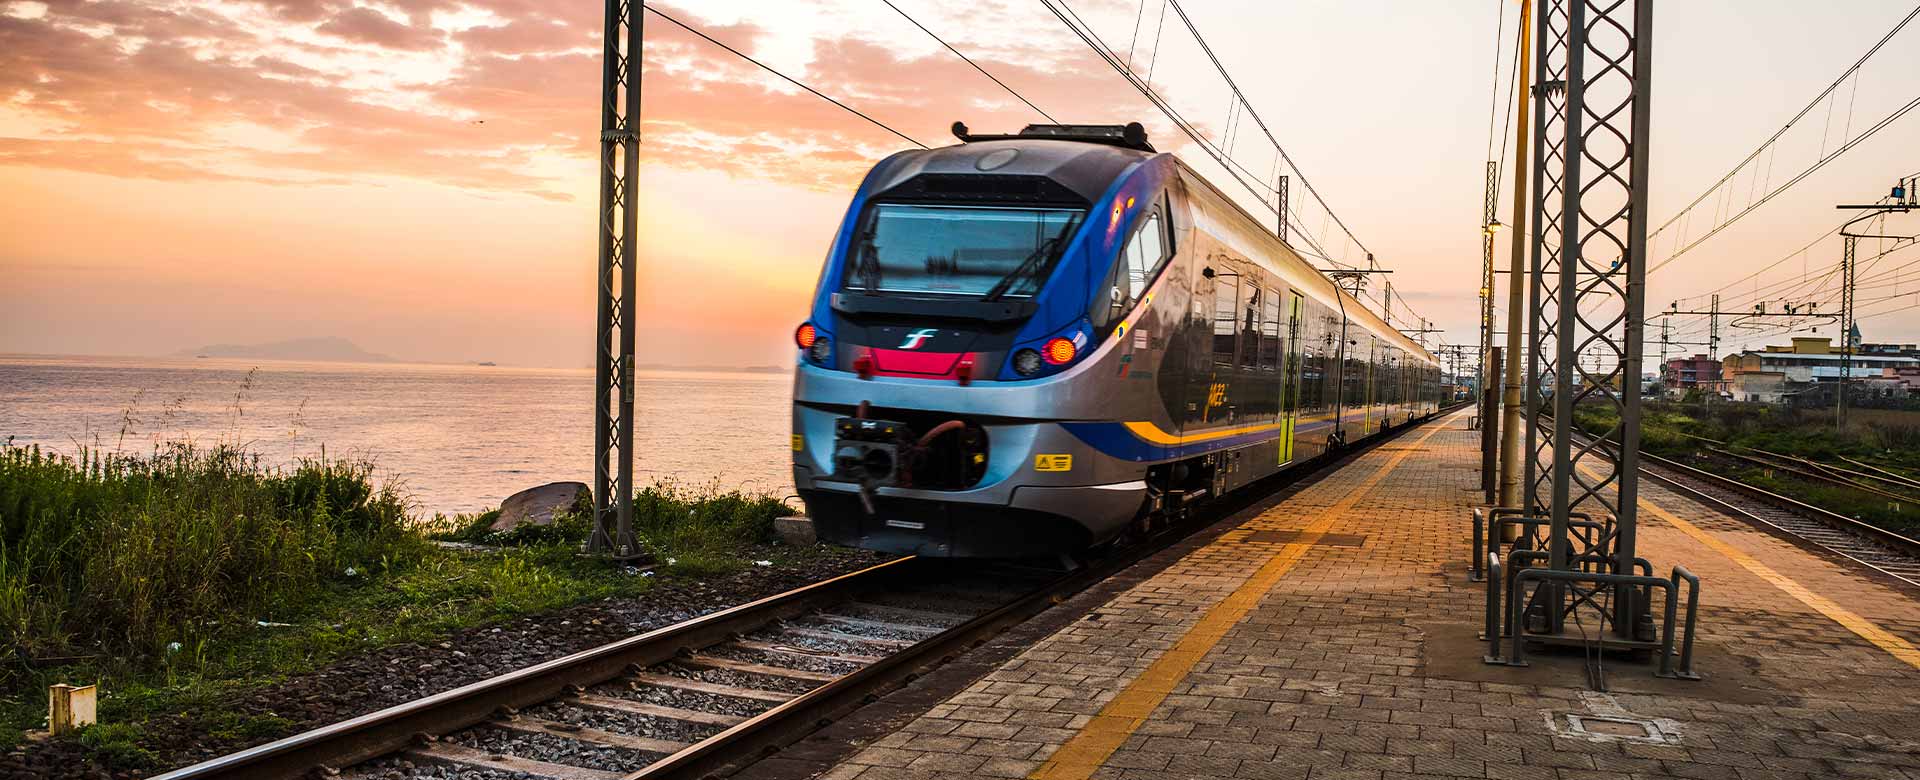 treno regionale al tramonto